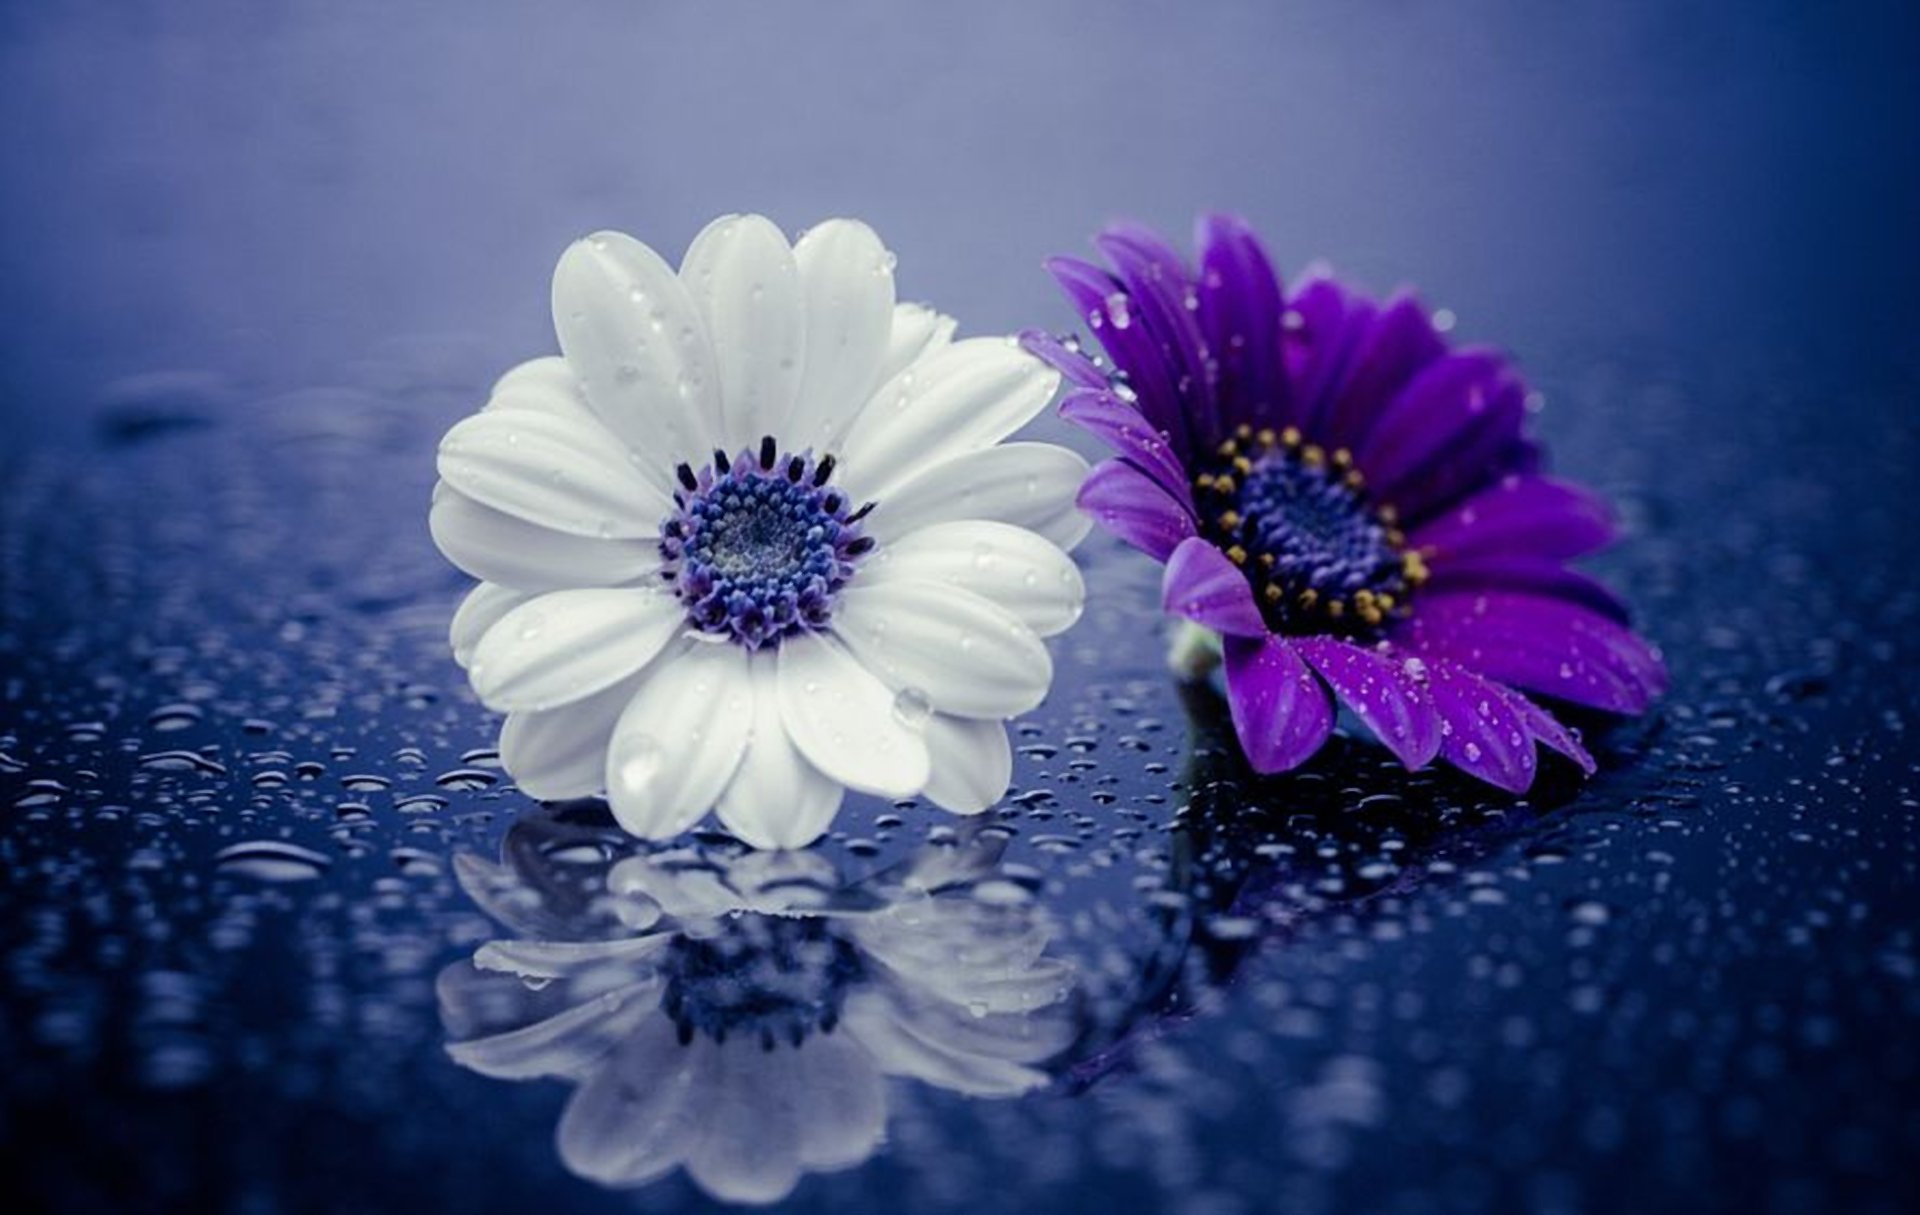 papatya wallpaper,blue,petal,violet,flower,purple